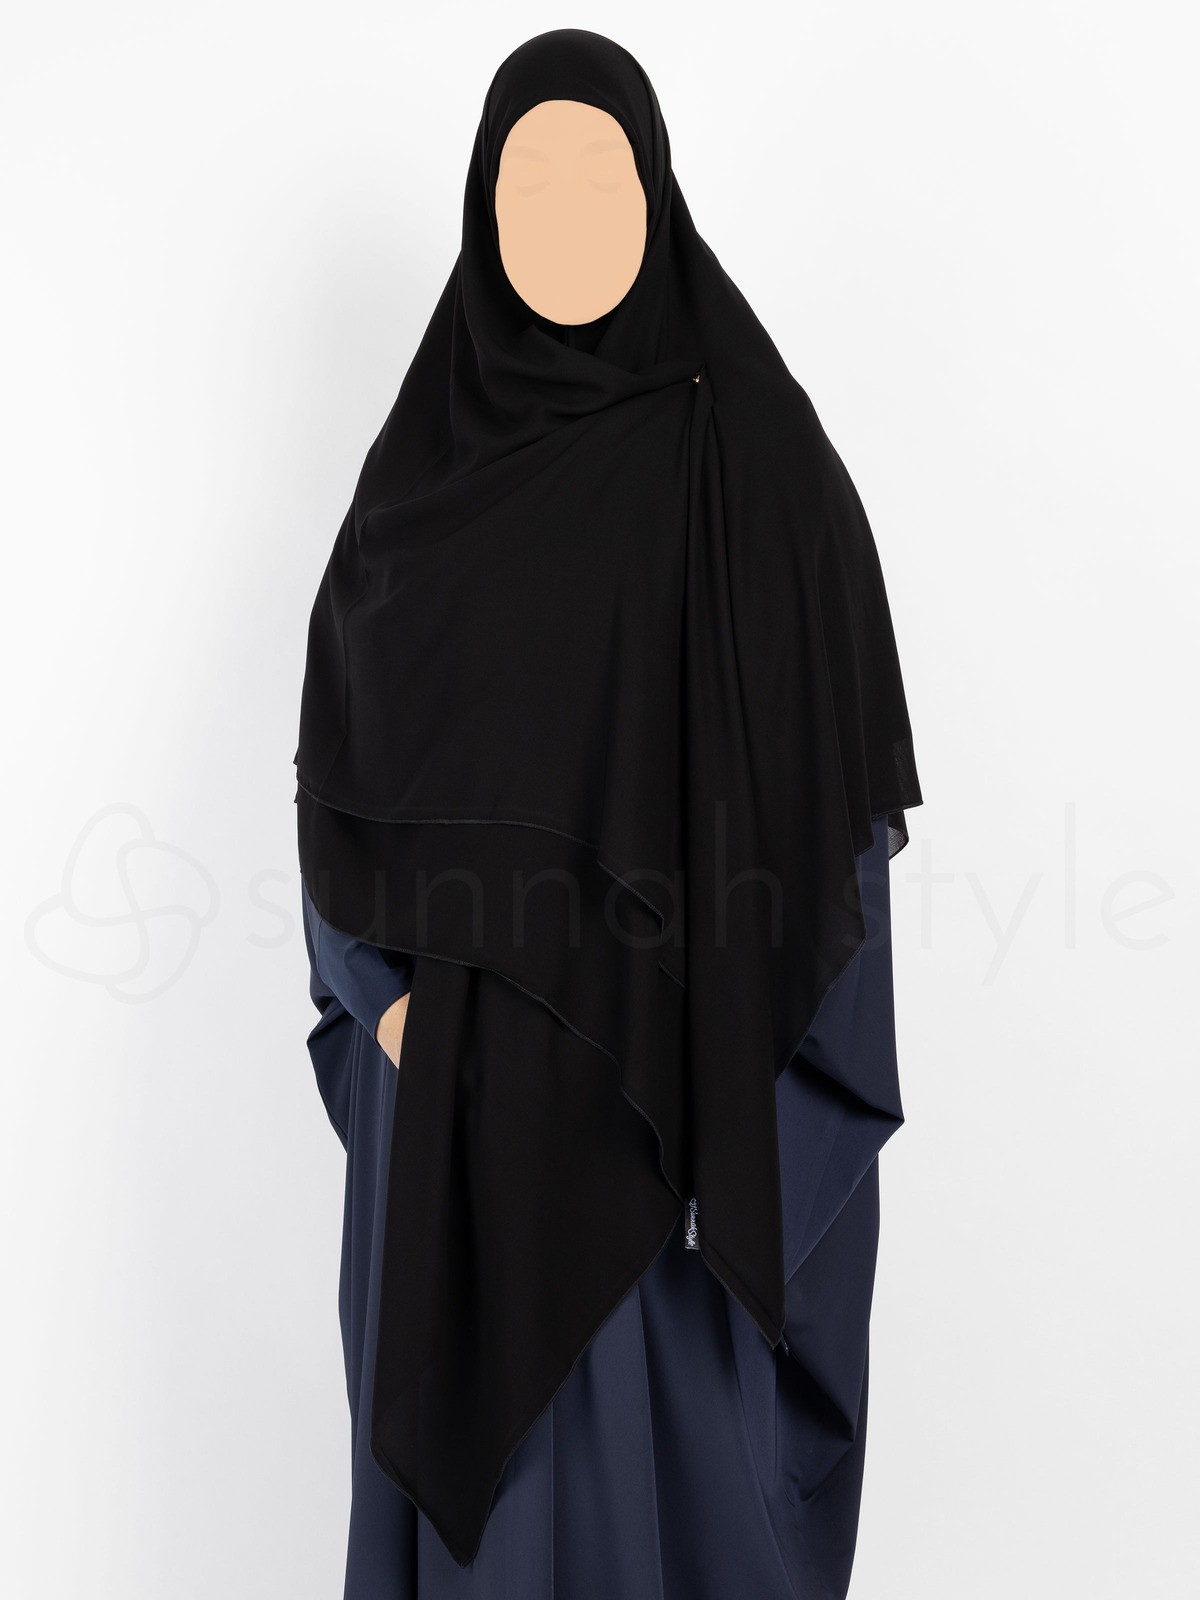 Sunnah Style - Essentials Square Hijab (Premium Chiffon) - XL (Black)